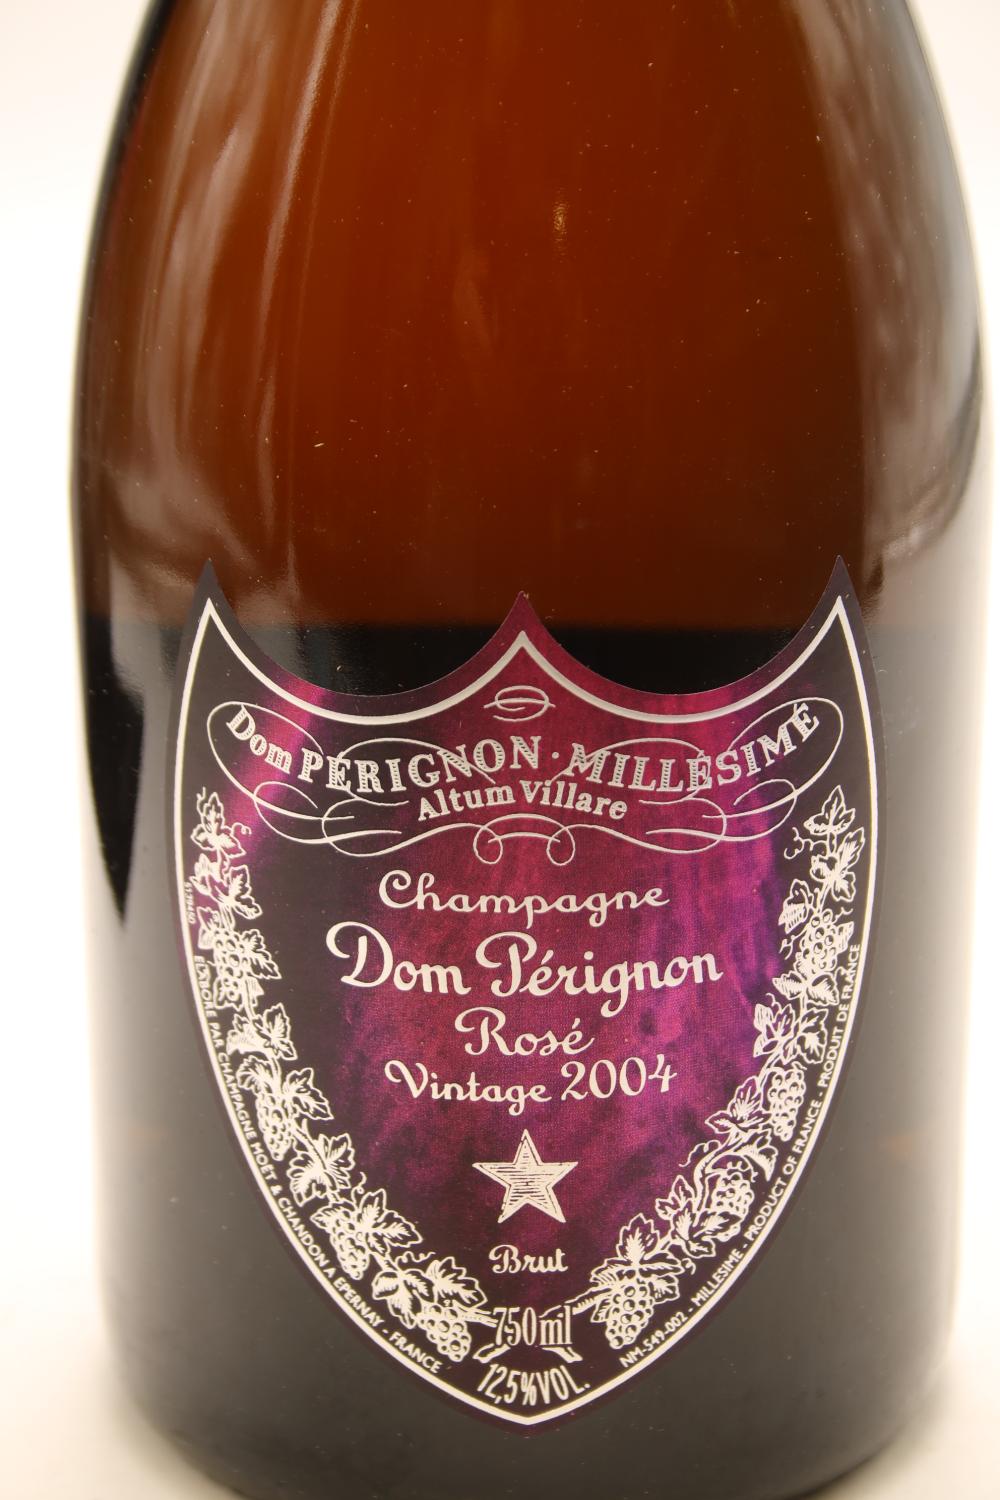 Dom Perignon Bjork & Chris Cunningham Rose Limited Edition 2004 - Moet  Chandon, Buy Online